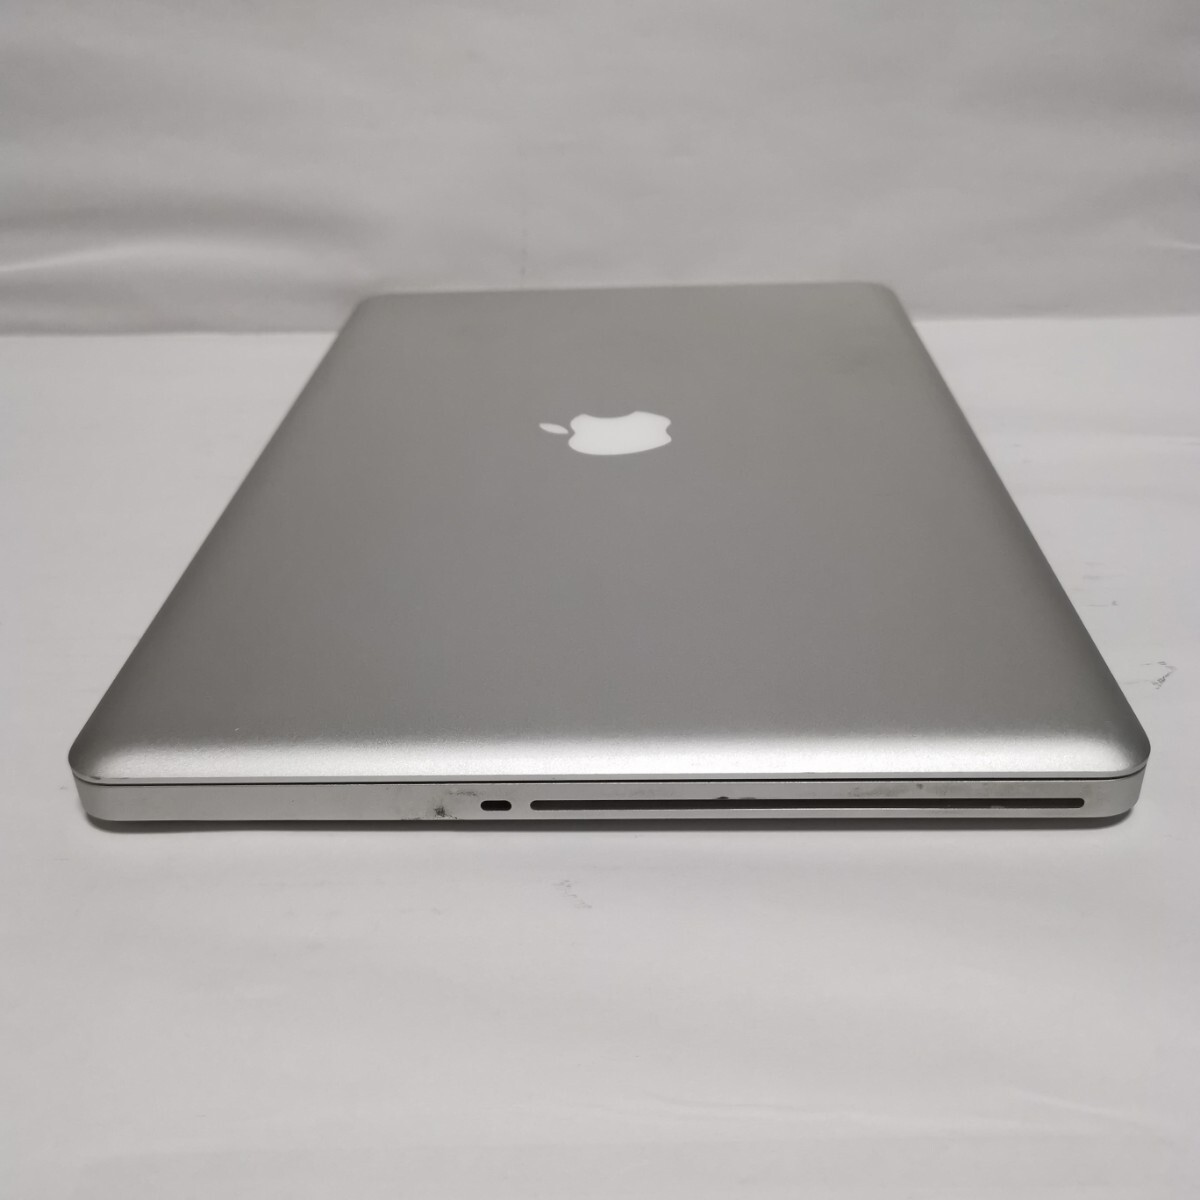 Apple MacBook Pro Mid 2012 15インチ Core i7 2.3GHz・4GBメモリ・500GB HDD モデル番号A1286 動作確認済み_画像5